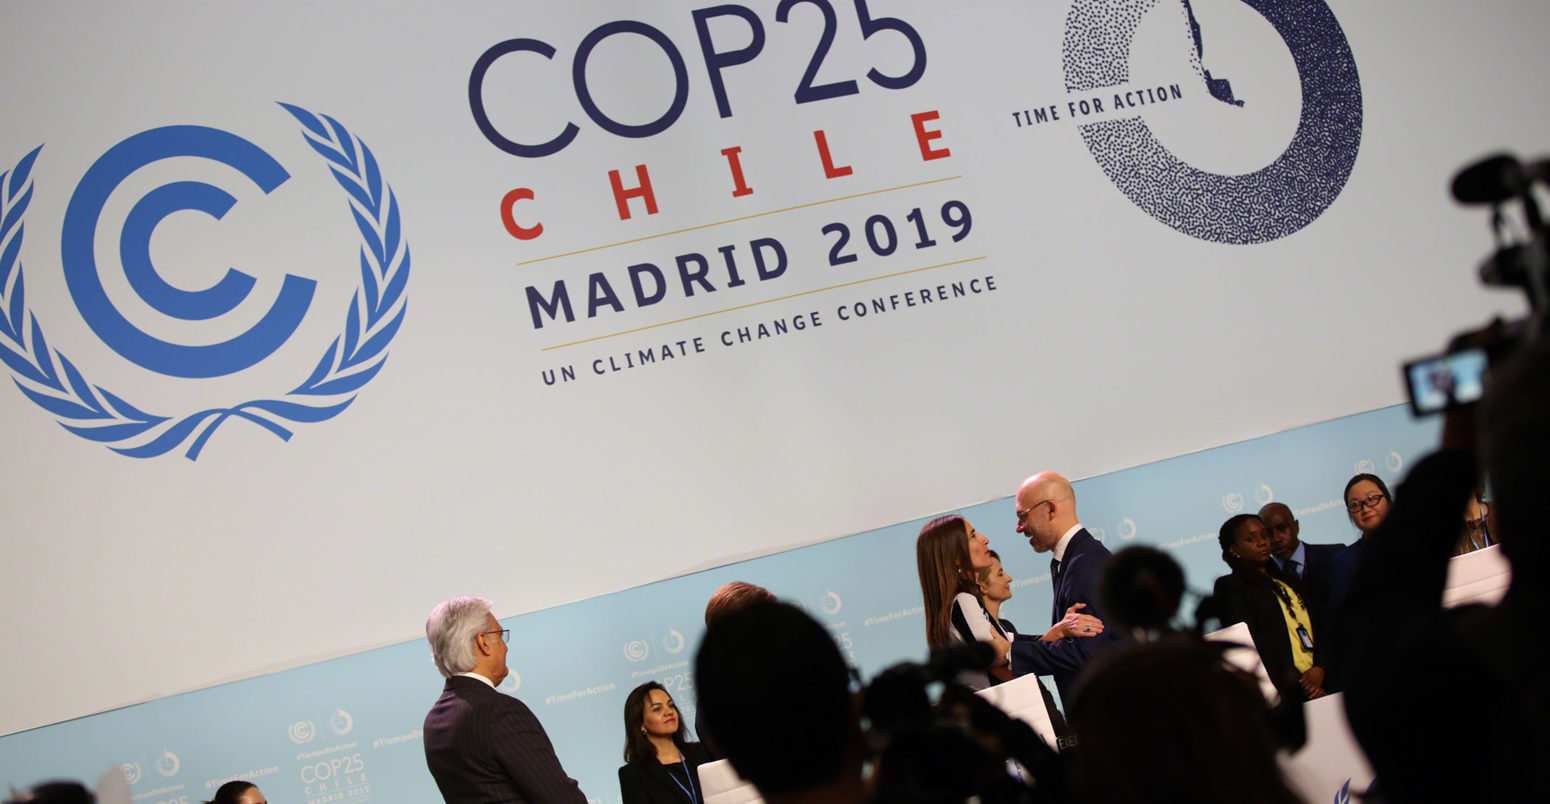 Michał Kurtyka, COP 24 President, Poland, welcomes Carolina Schmidt, COP 25 President, Chile, to the podium to take over the presidency.